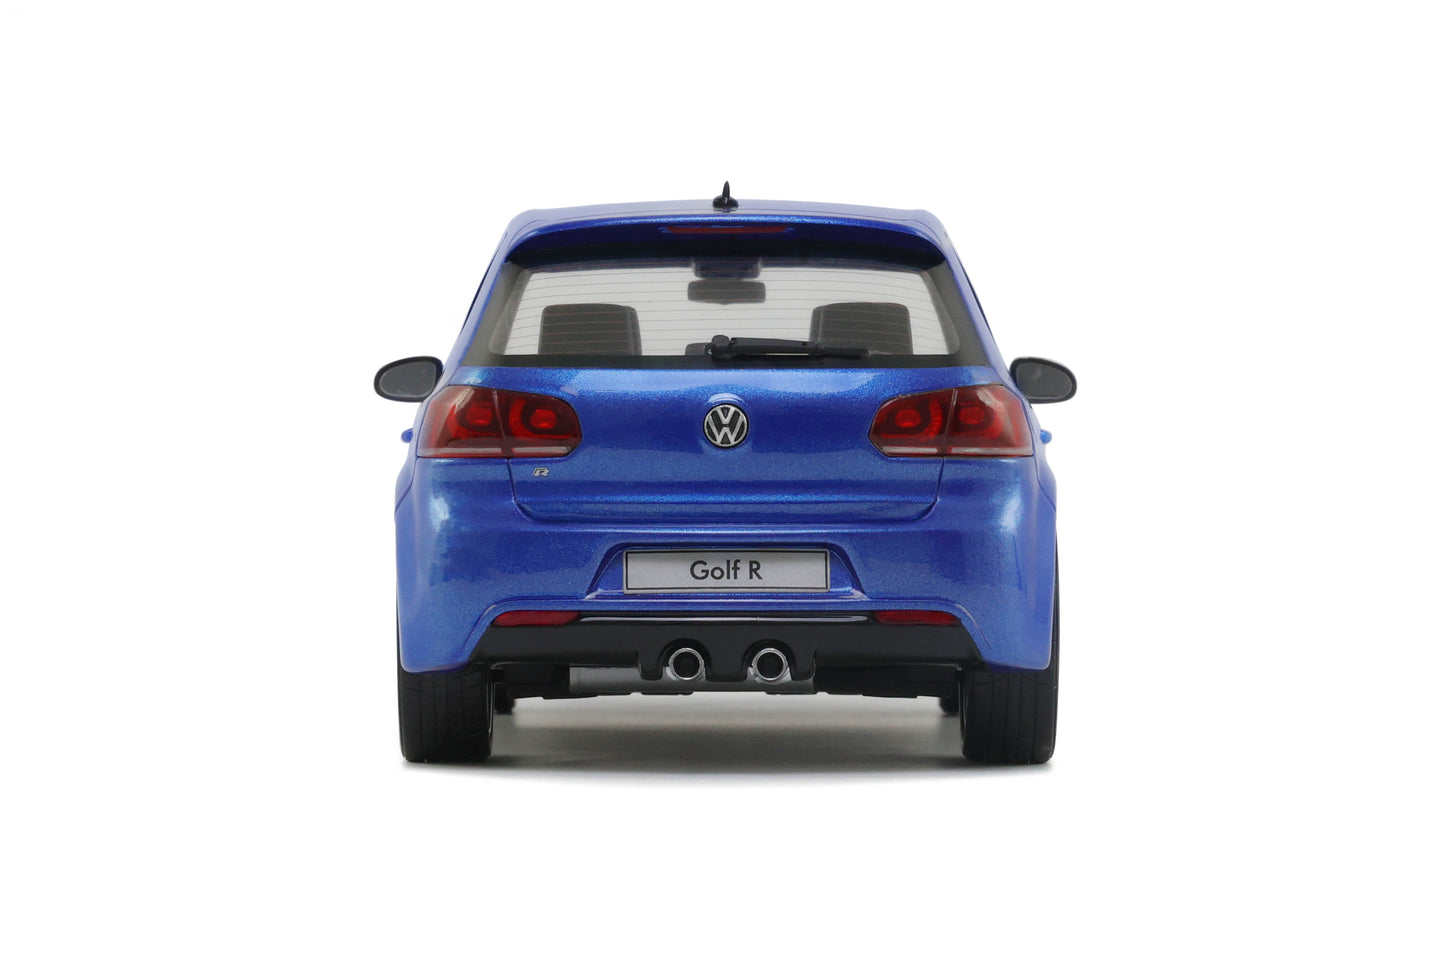 OttOmobile - Volkswagen Golf R (MK6) (Lapris Blue Metallic) 1:18 Scale Model Car